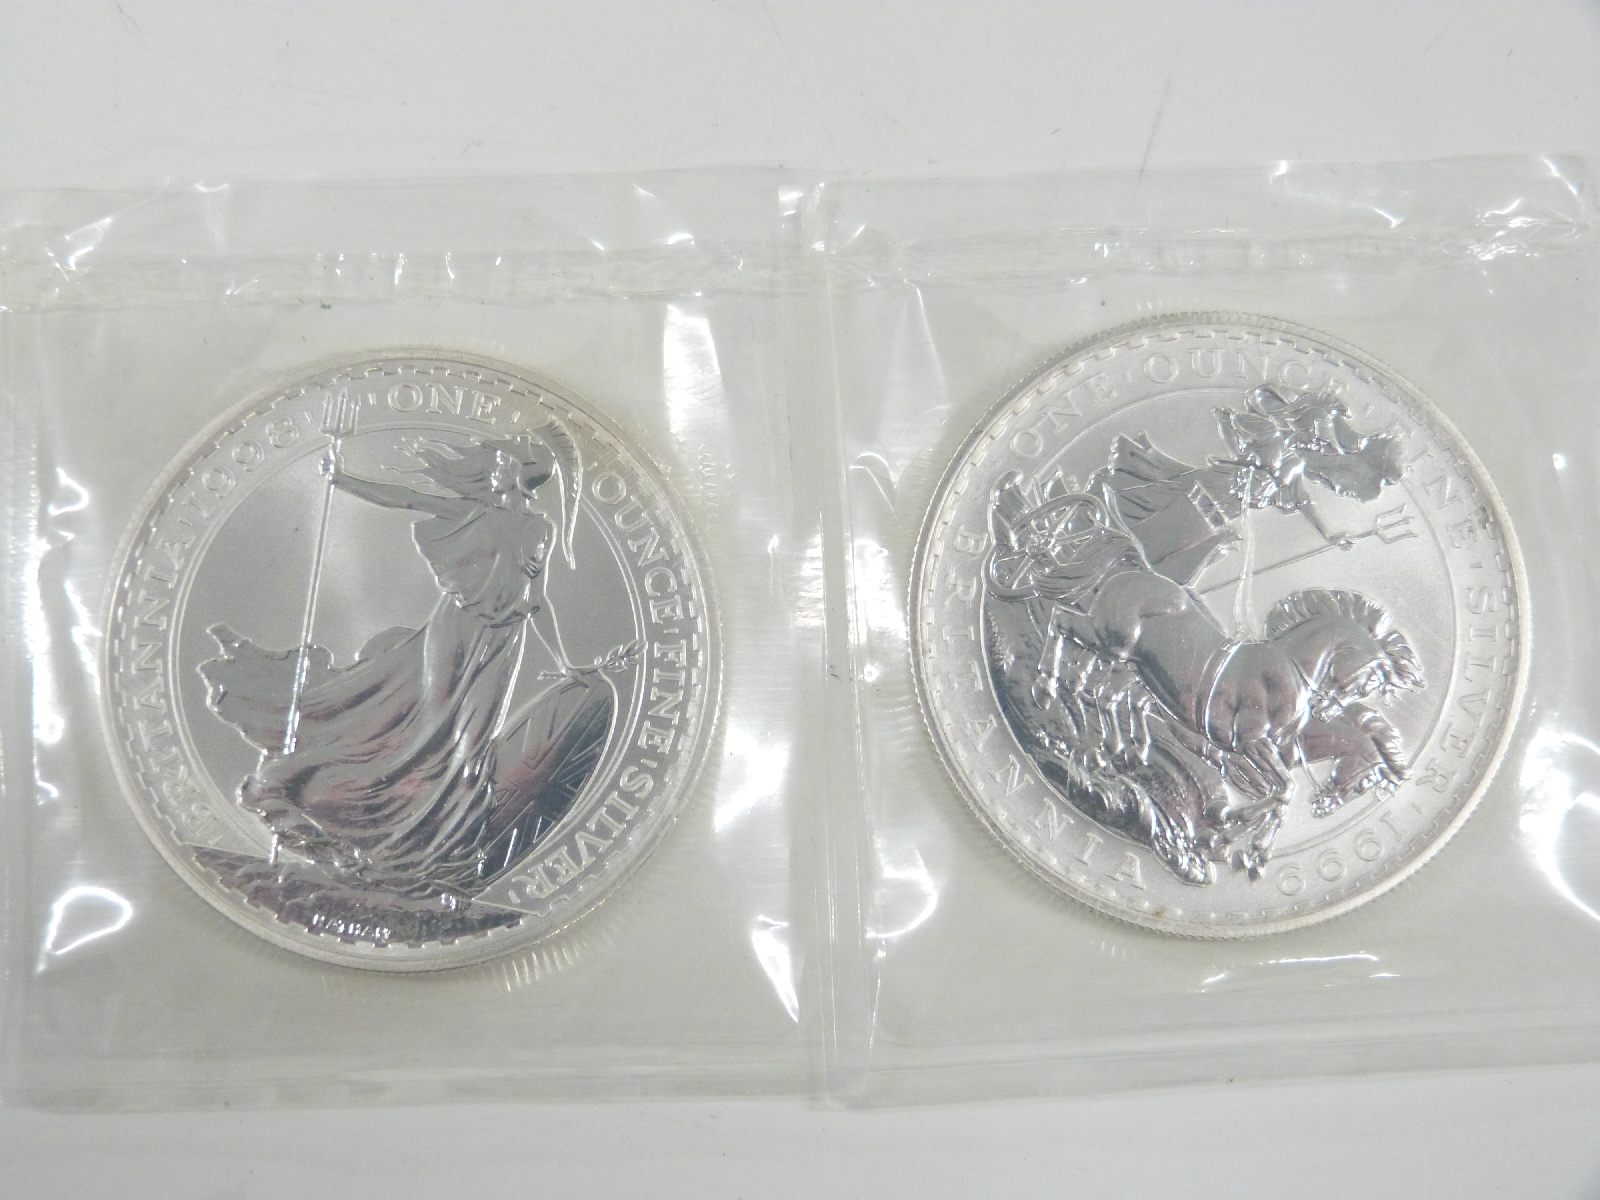 1998 one ounce silver Britannia and a 1999 example